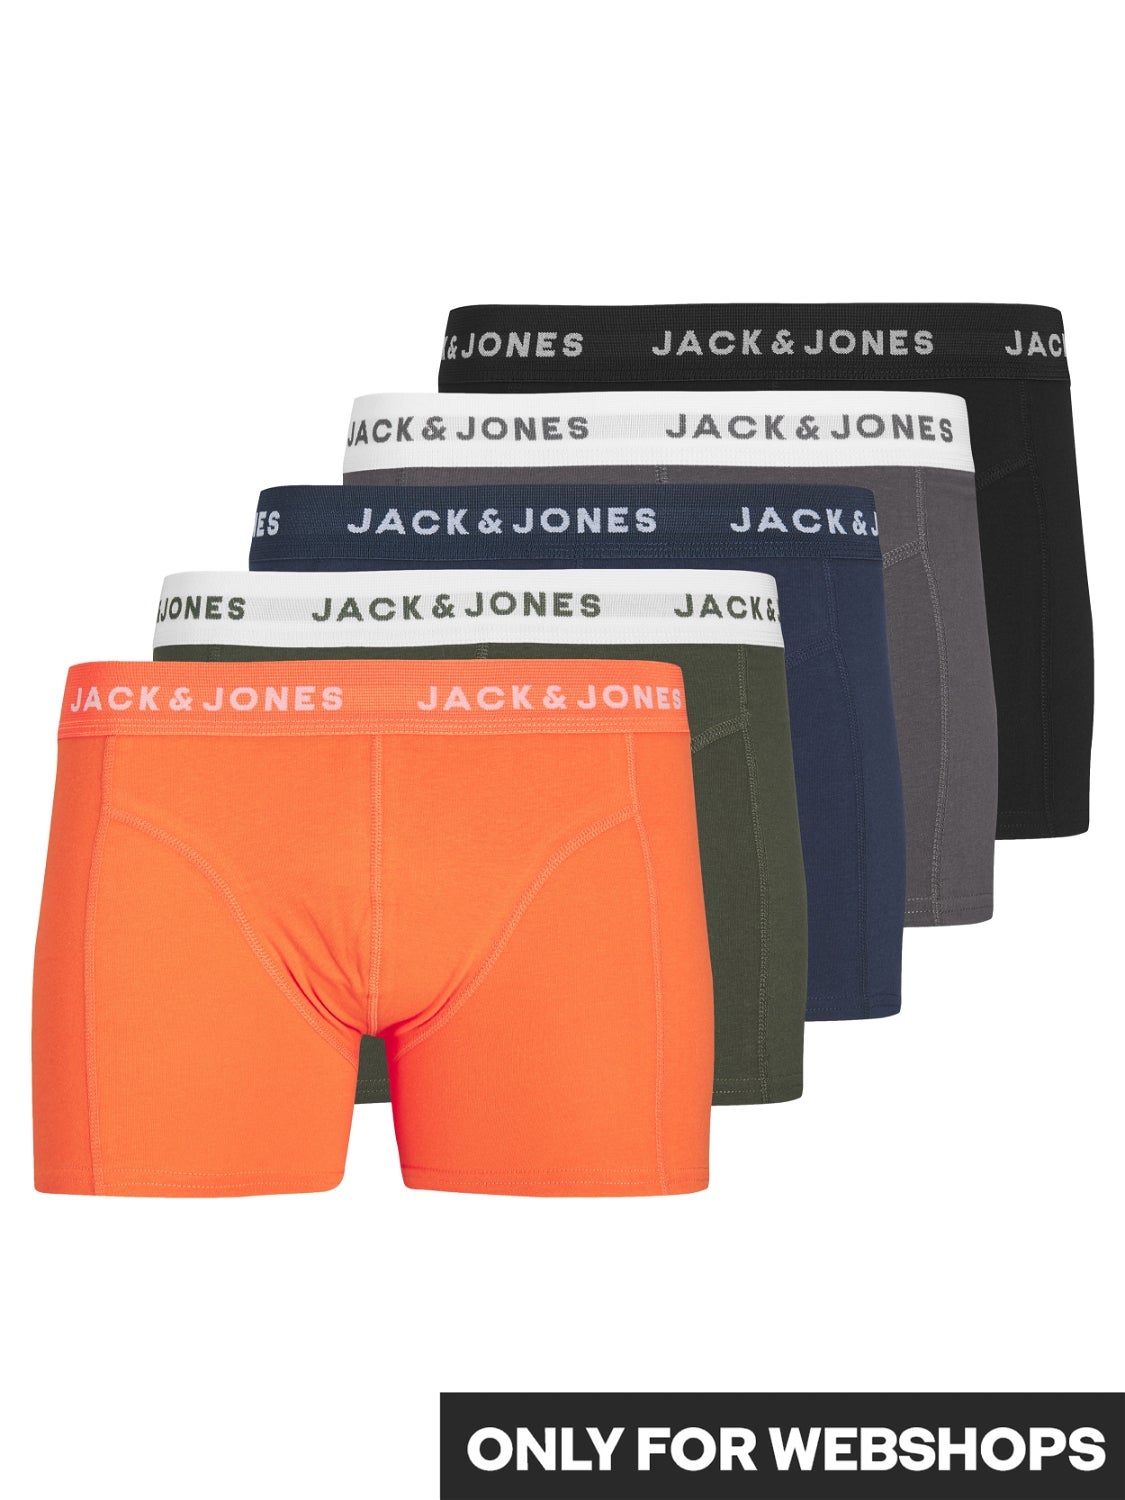 JACK  &  JONES Jack & Jones 5 Pack Trunks Black in Large BRAND NEW 